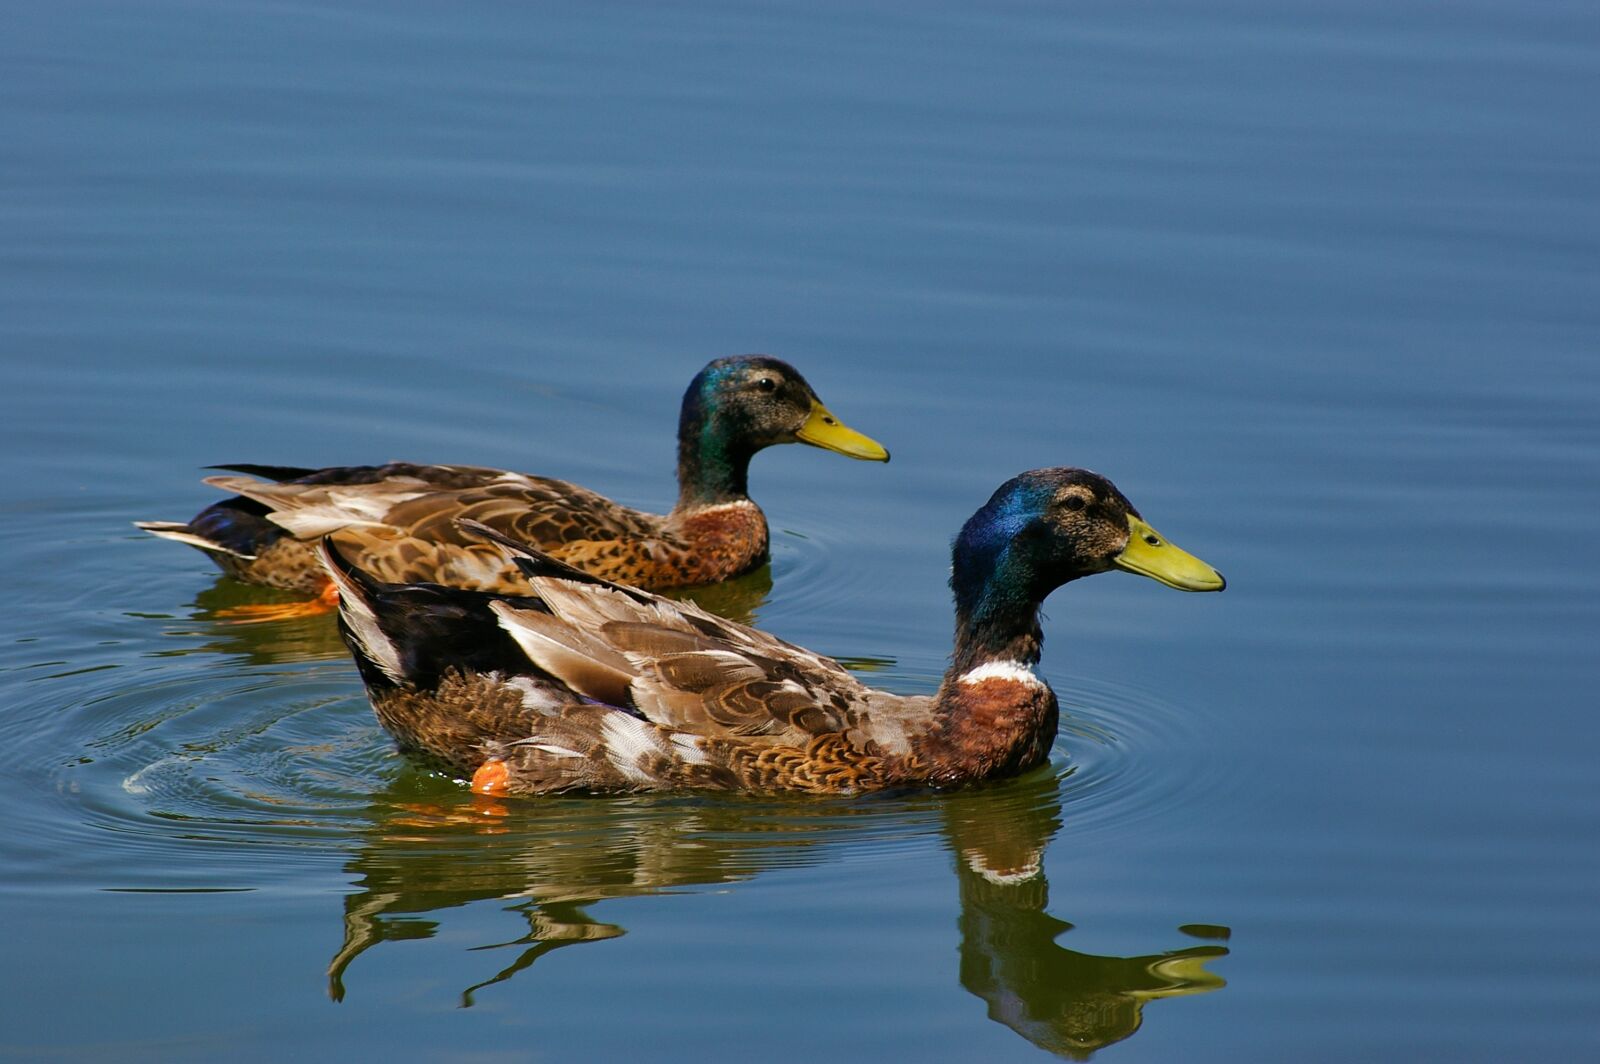 Pentax *ist DL sample photo. Duck, mallard, animals photography